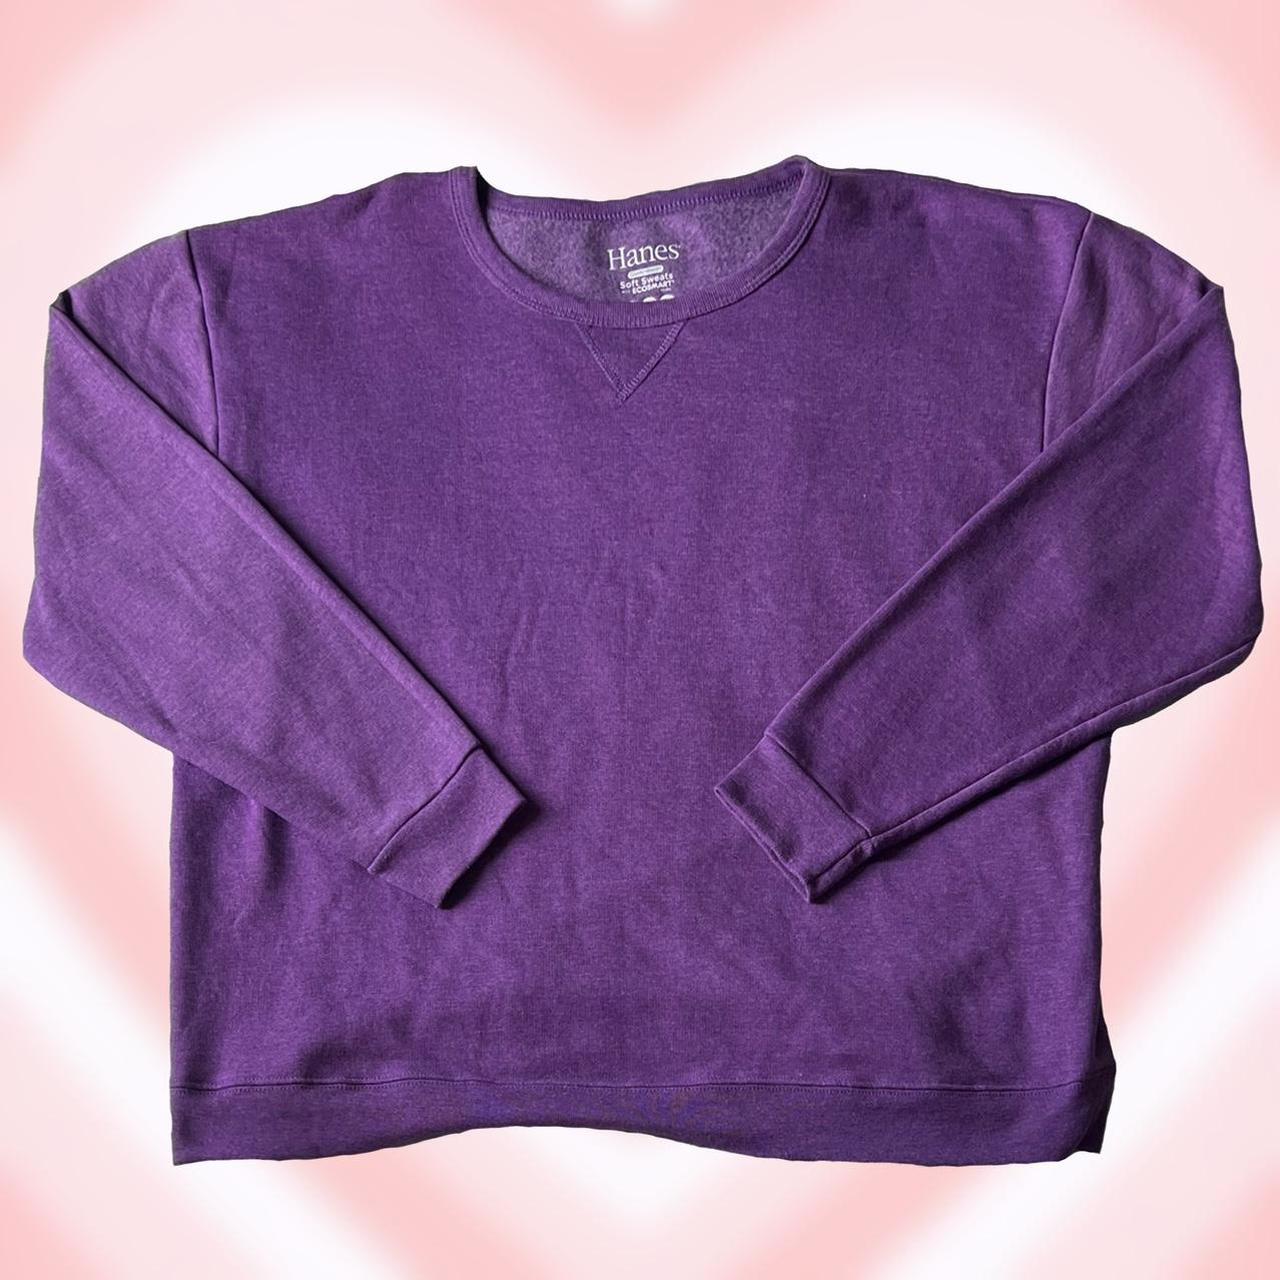 Hanes Women's Purple Sweatshirt | Depop